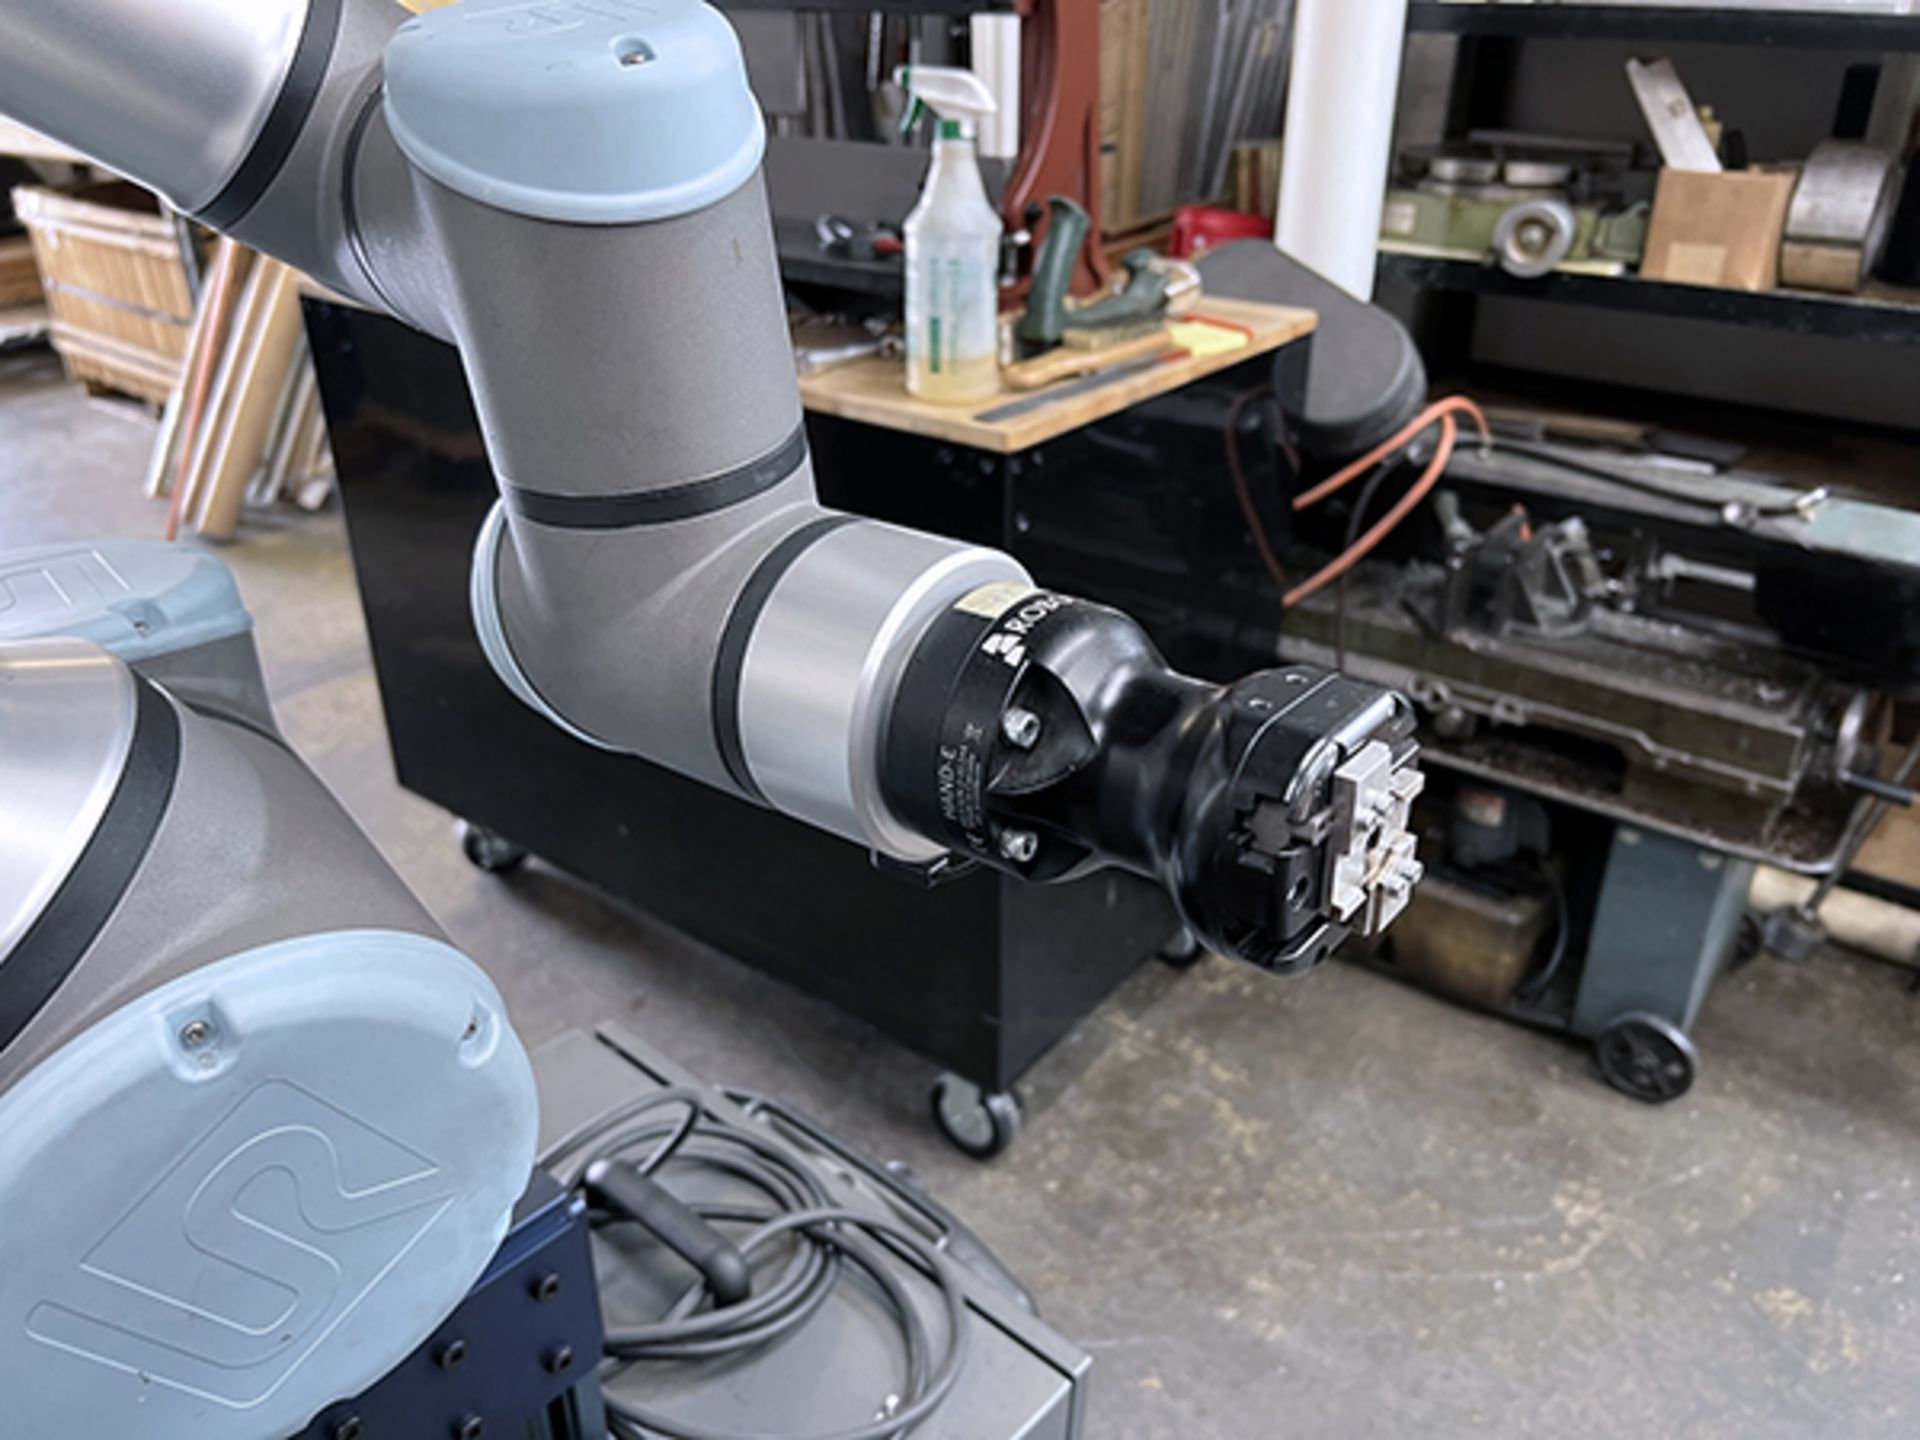 Universal Robot UR10e 6 Axis Robot (2019) - Image 5 of 12